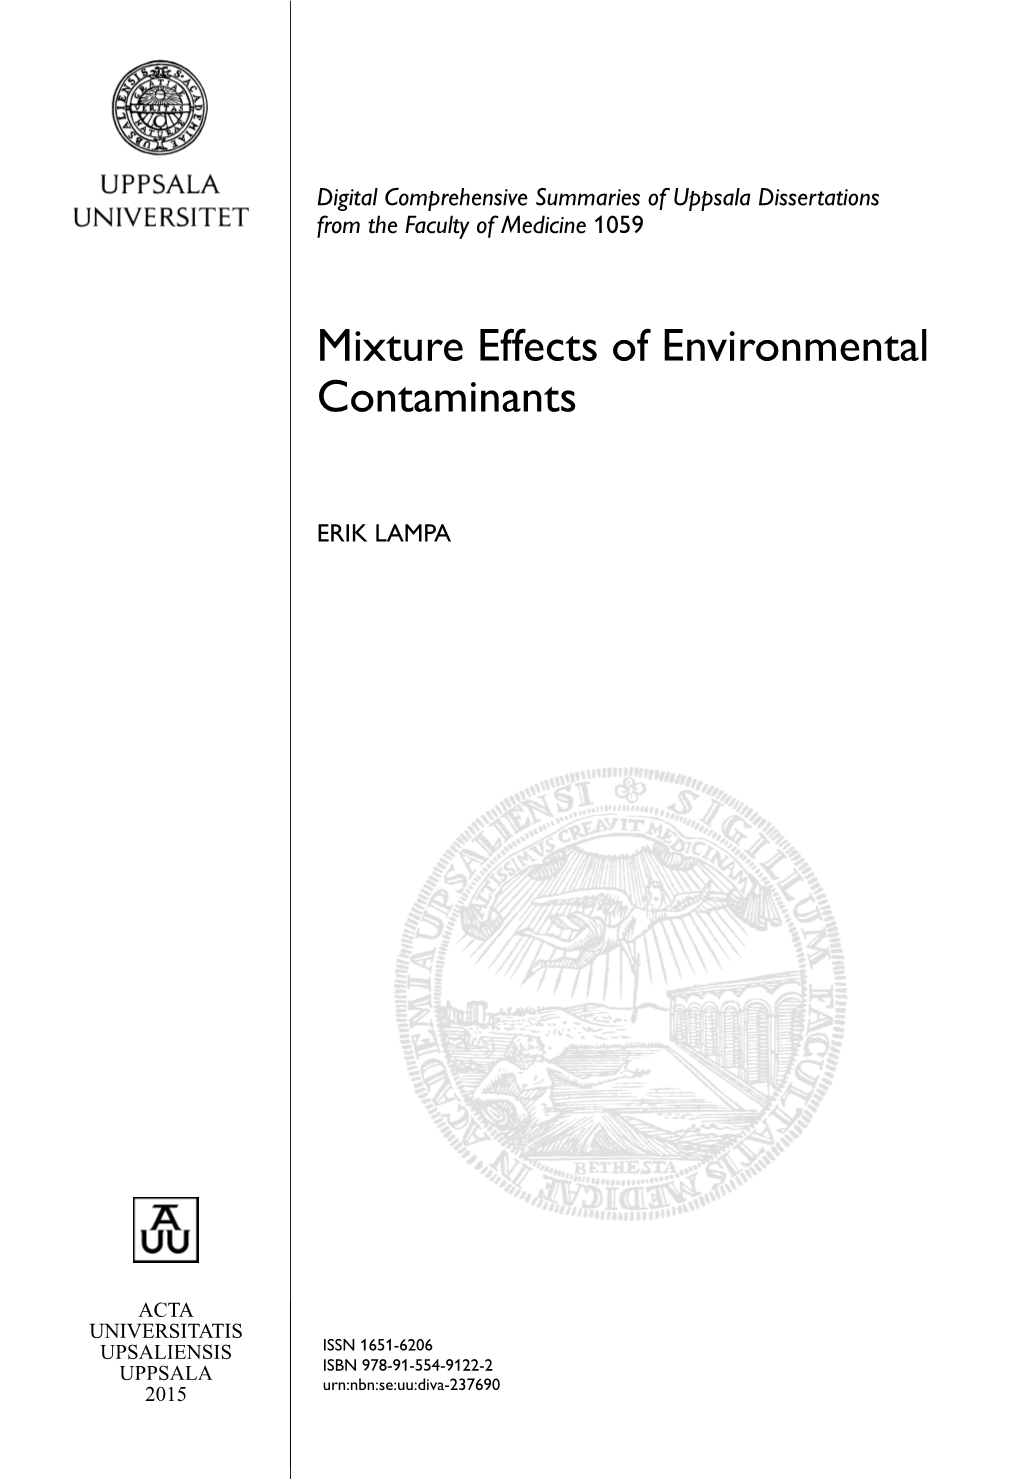 Mixture Effects of Environmental Contaminants